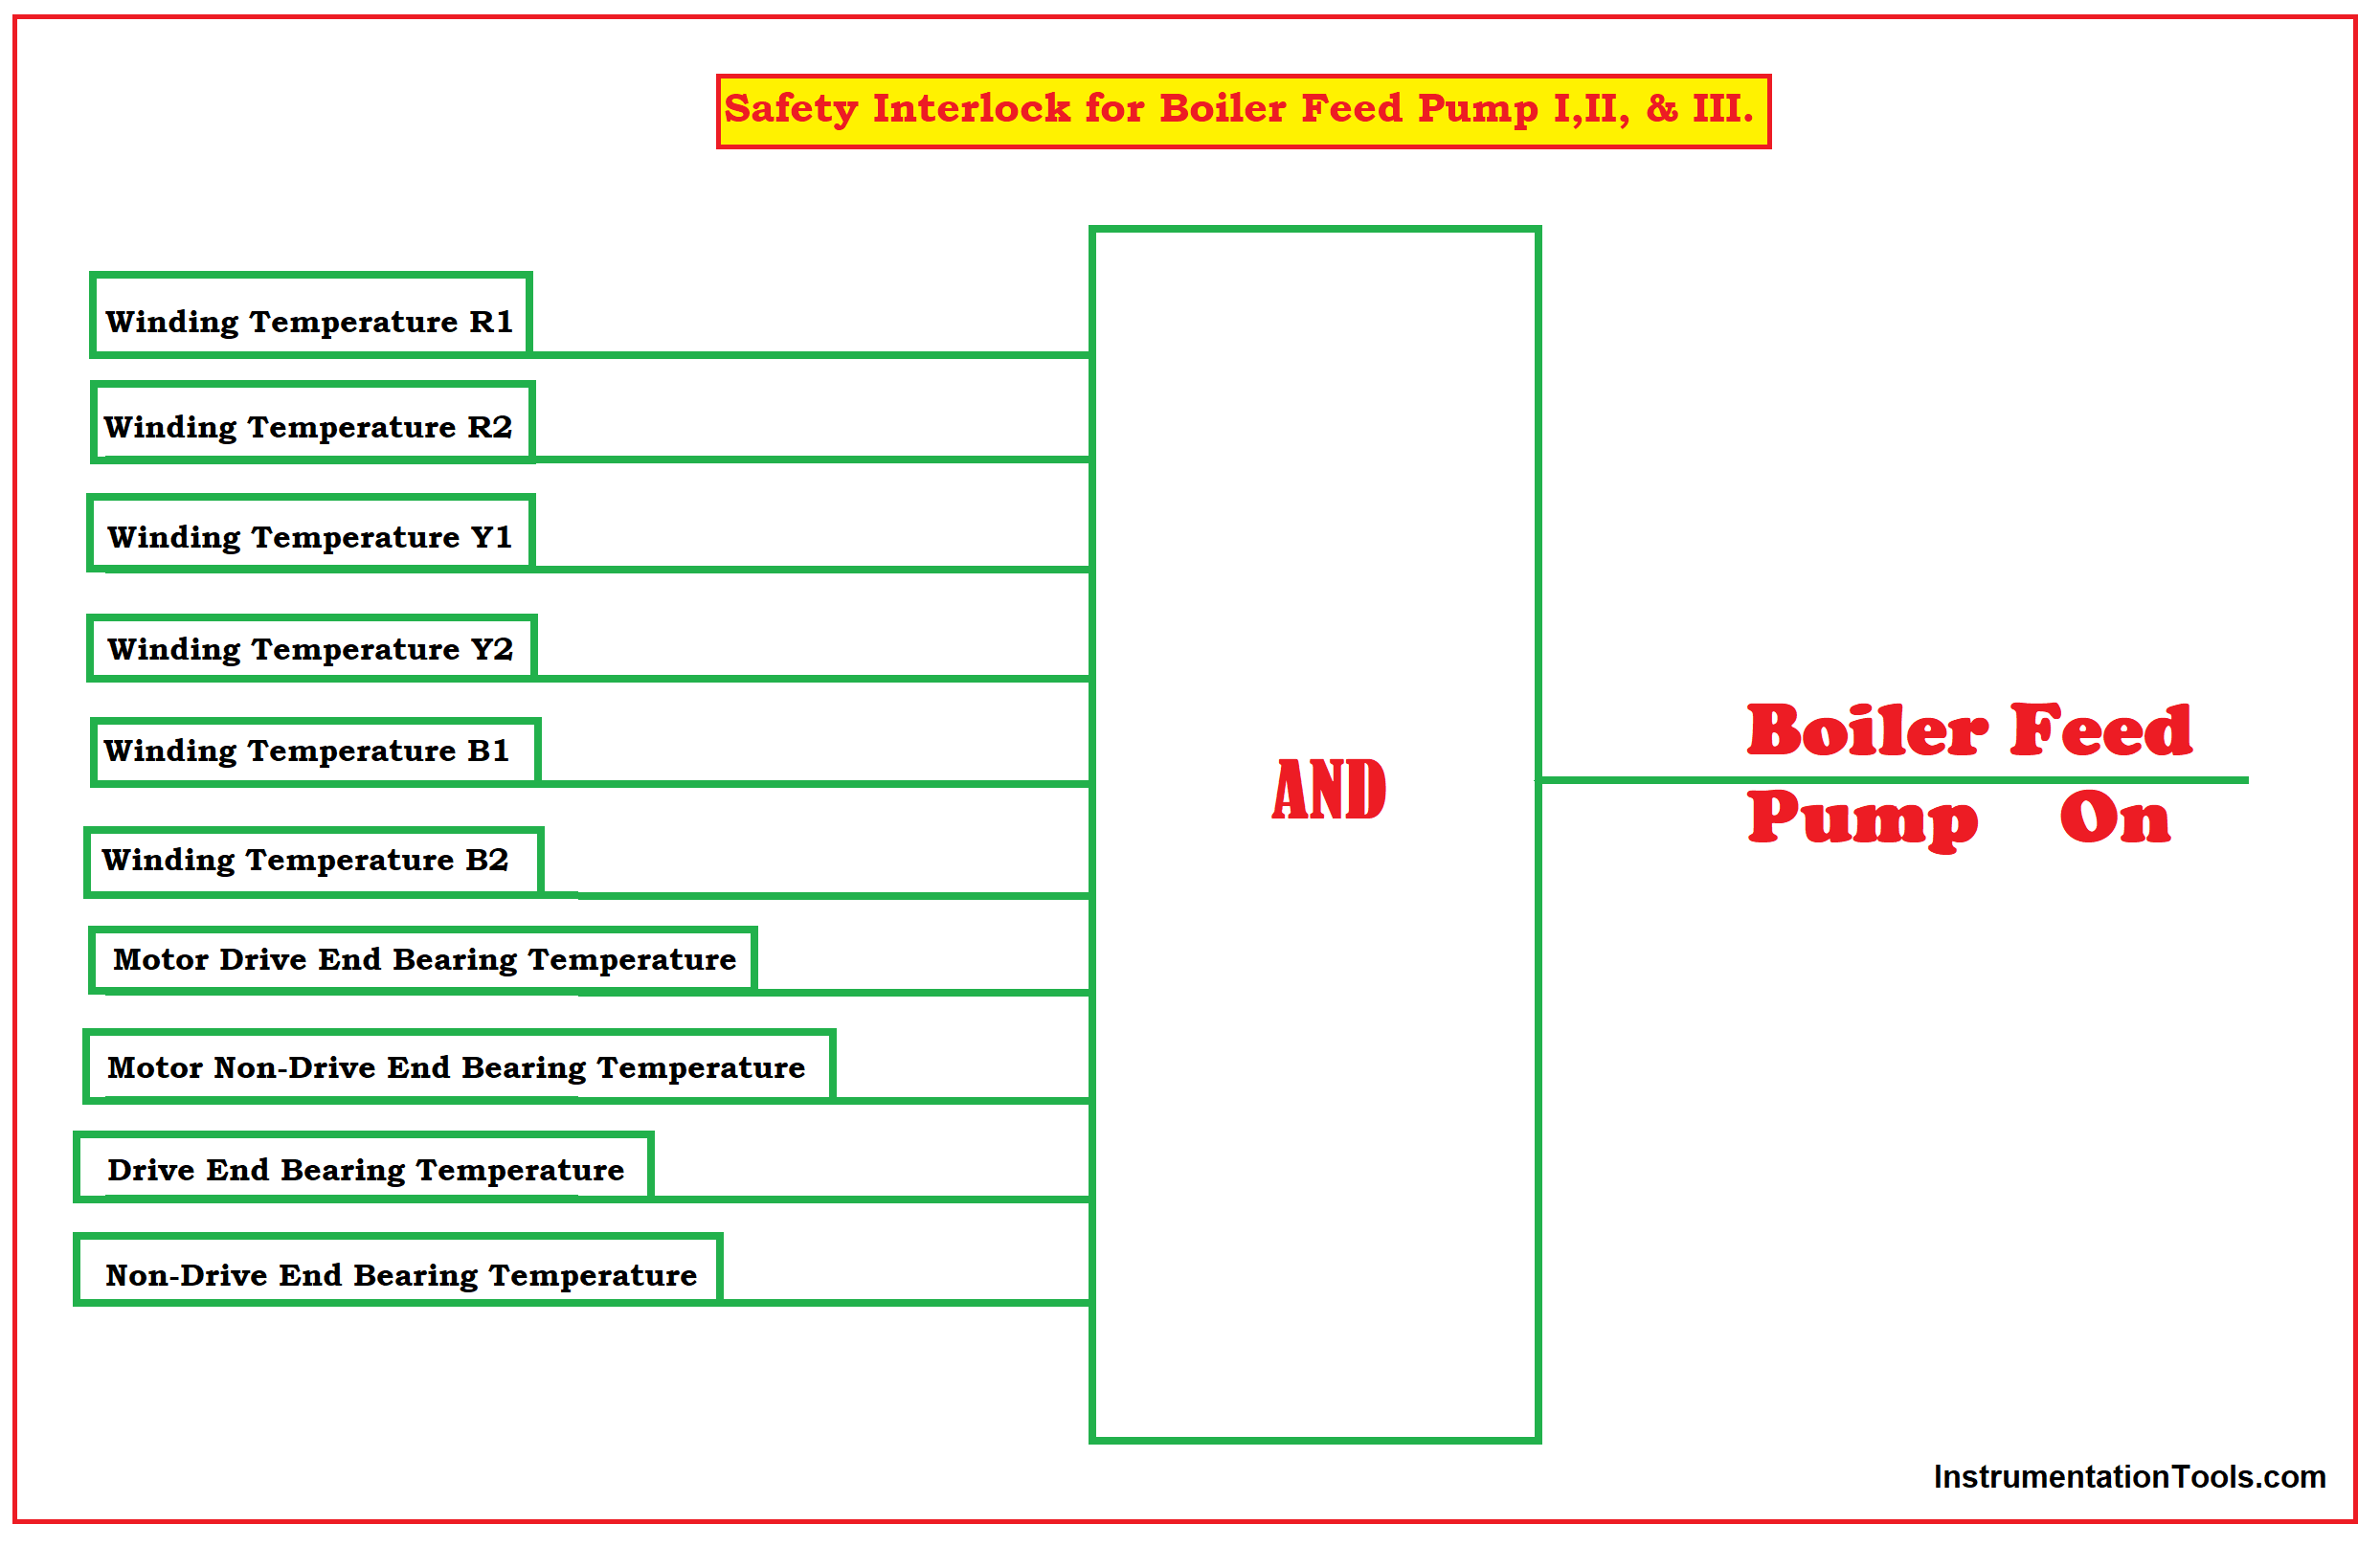 Boiler Safety and Process Interlocks